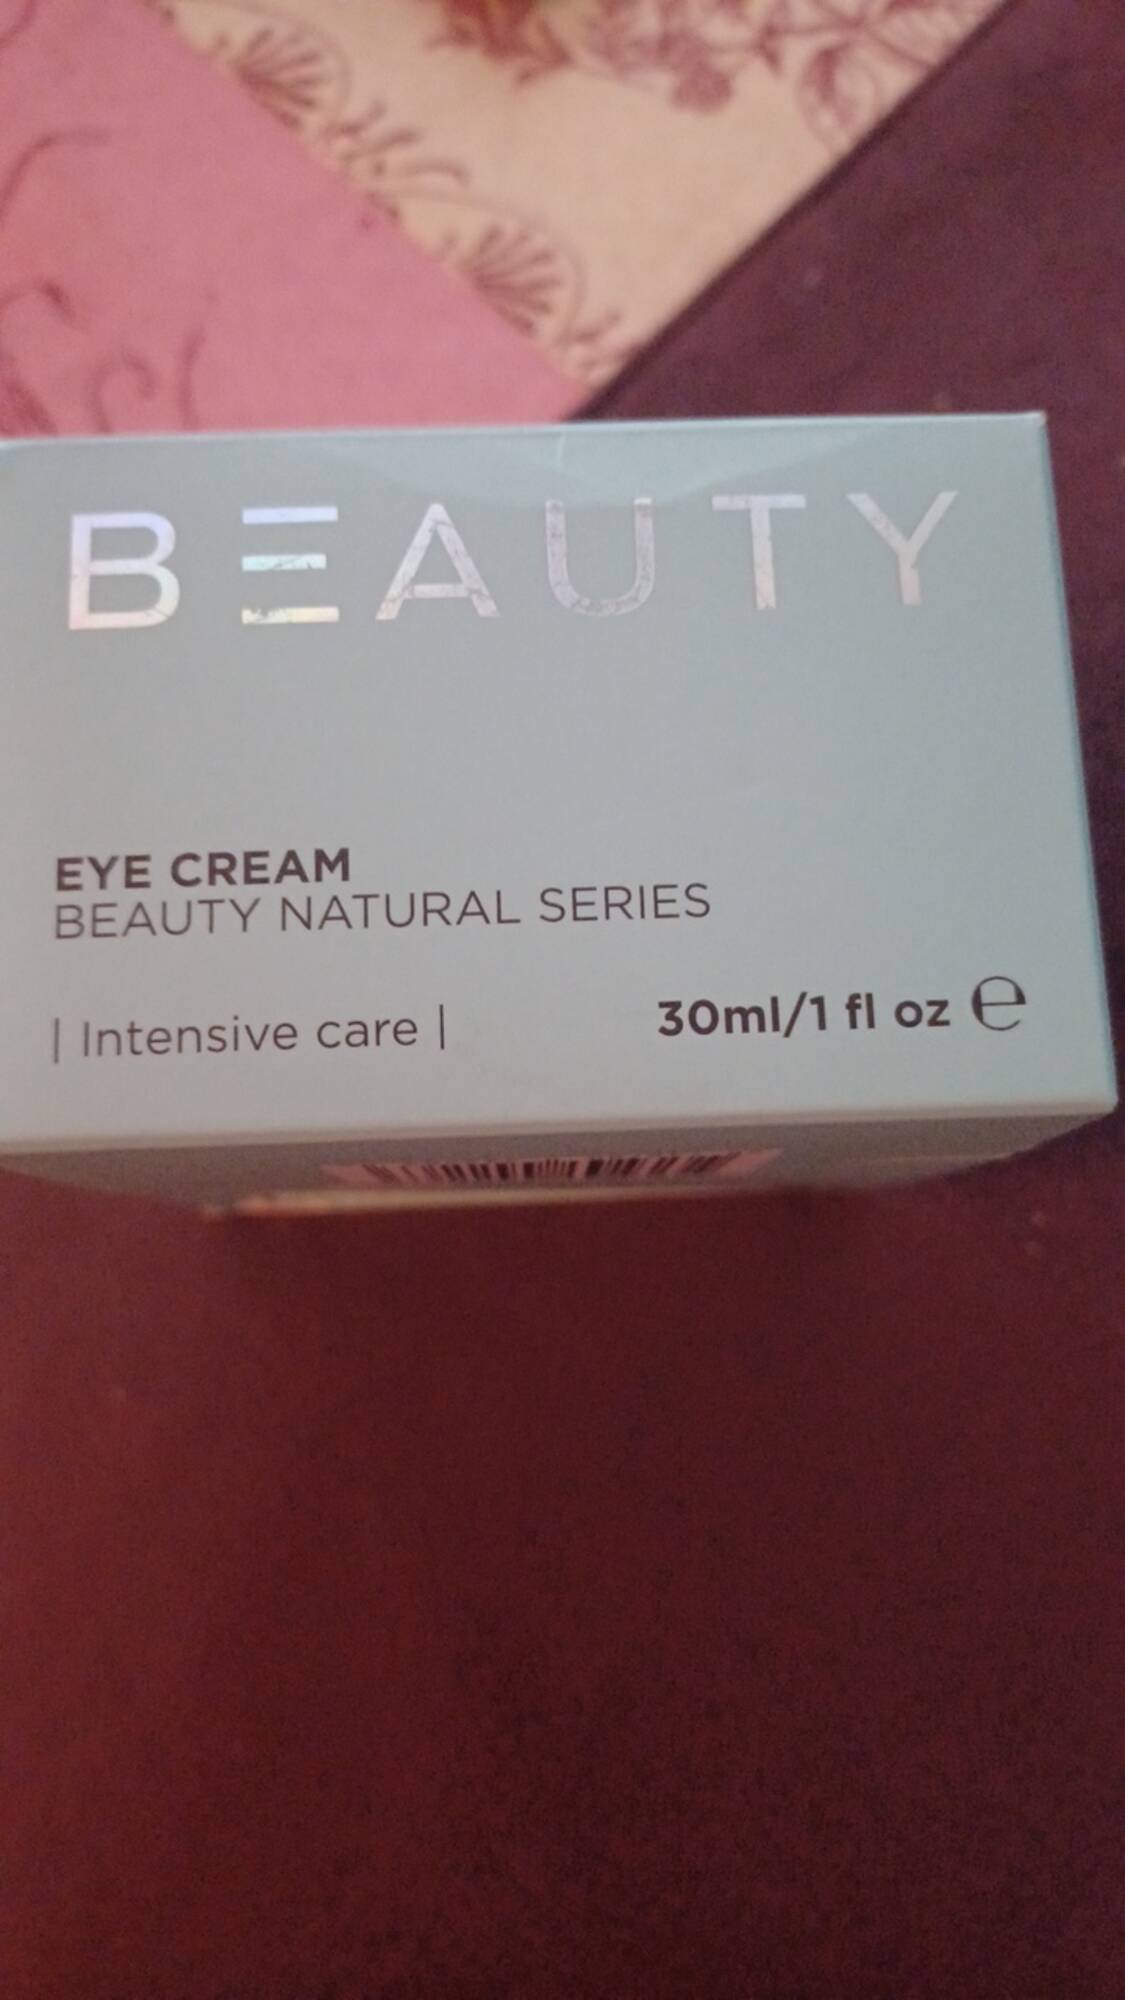 BEAUTY - Eye cream intensive care